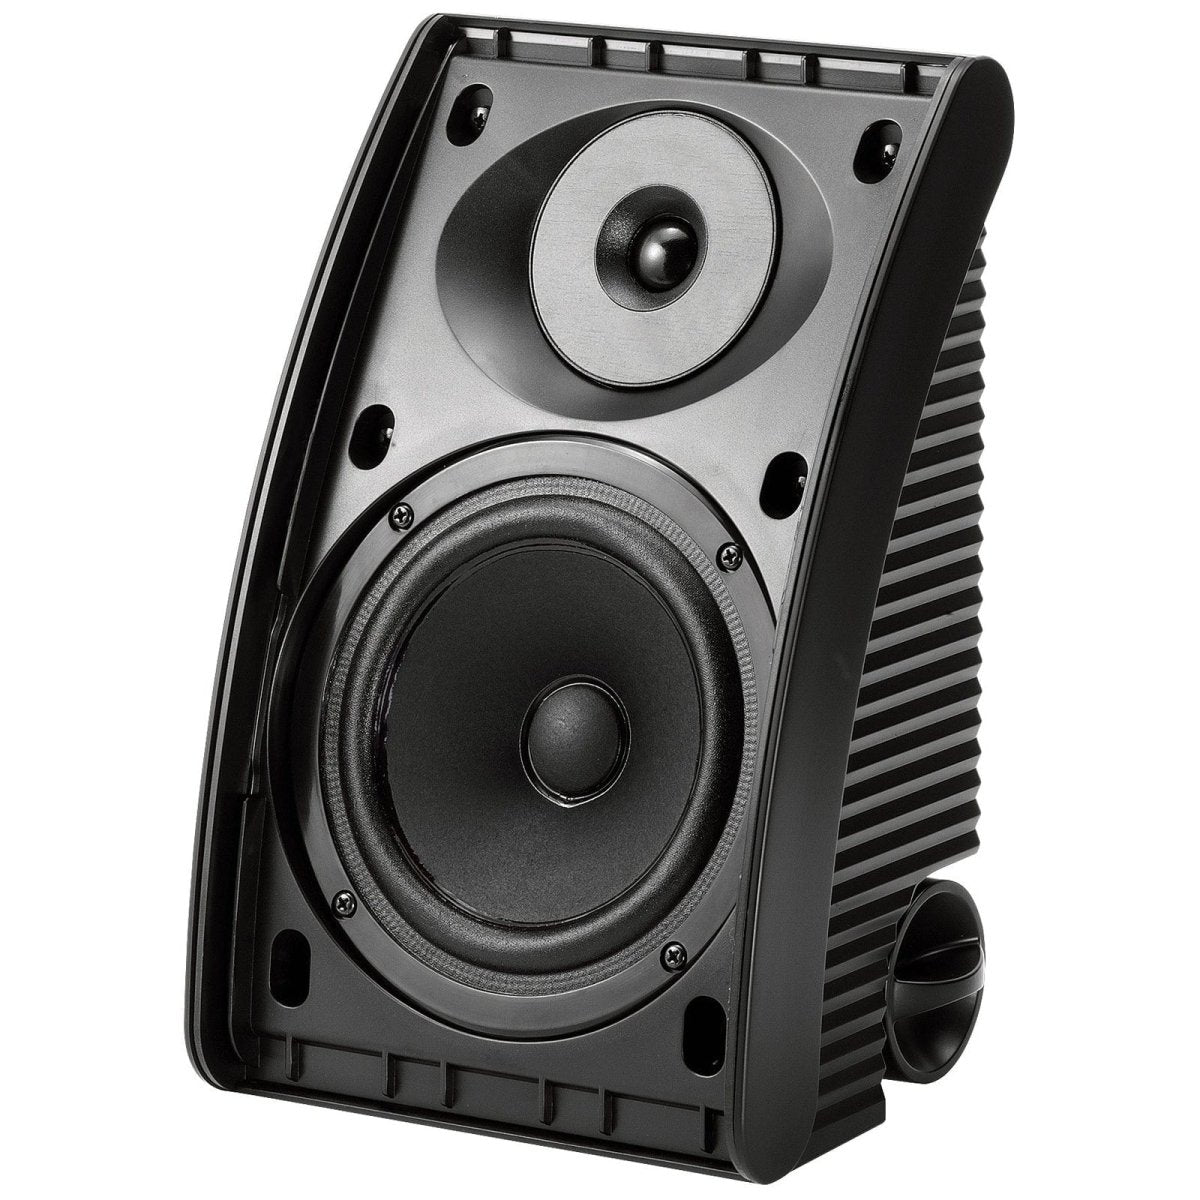 Yamaha NSAW392 120W All Weather Speakers (Pair) - Black - Atlantic Electrics